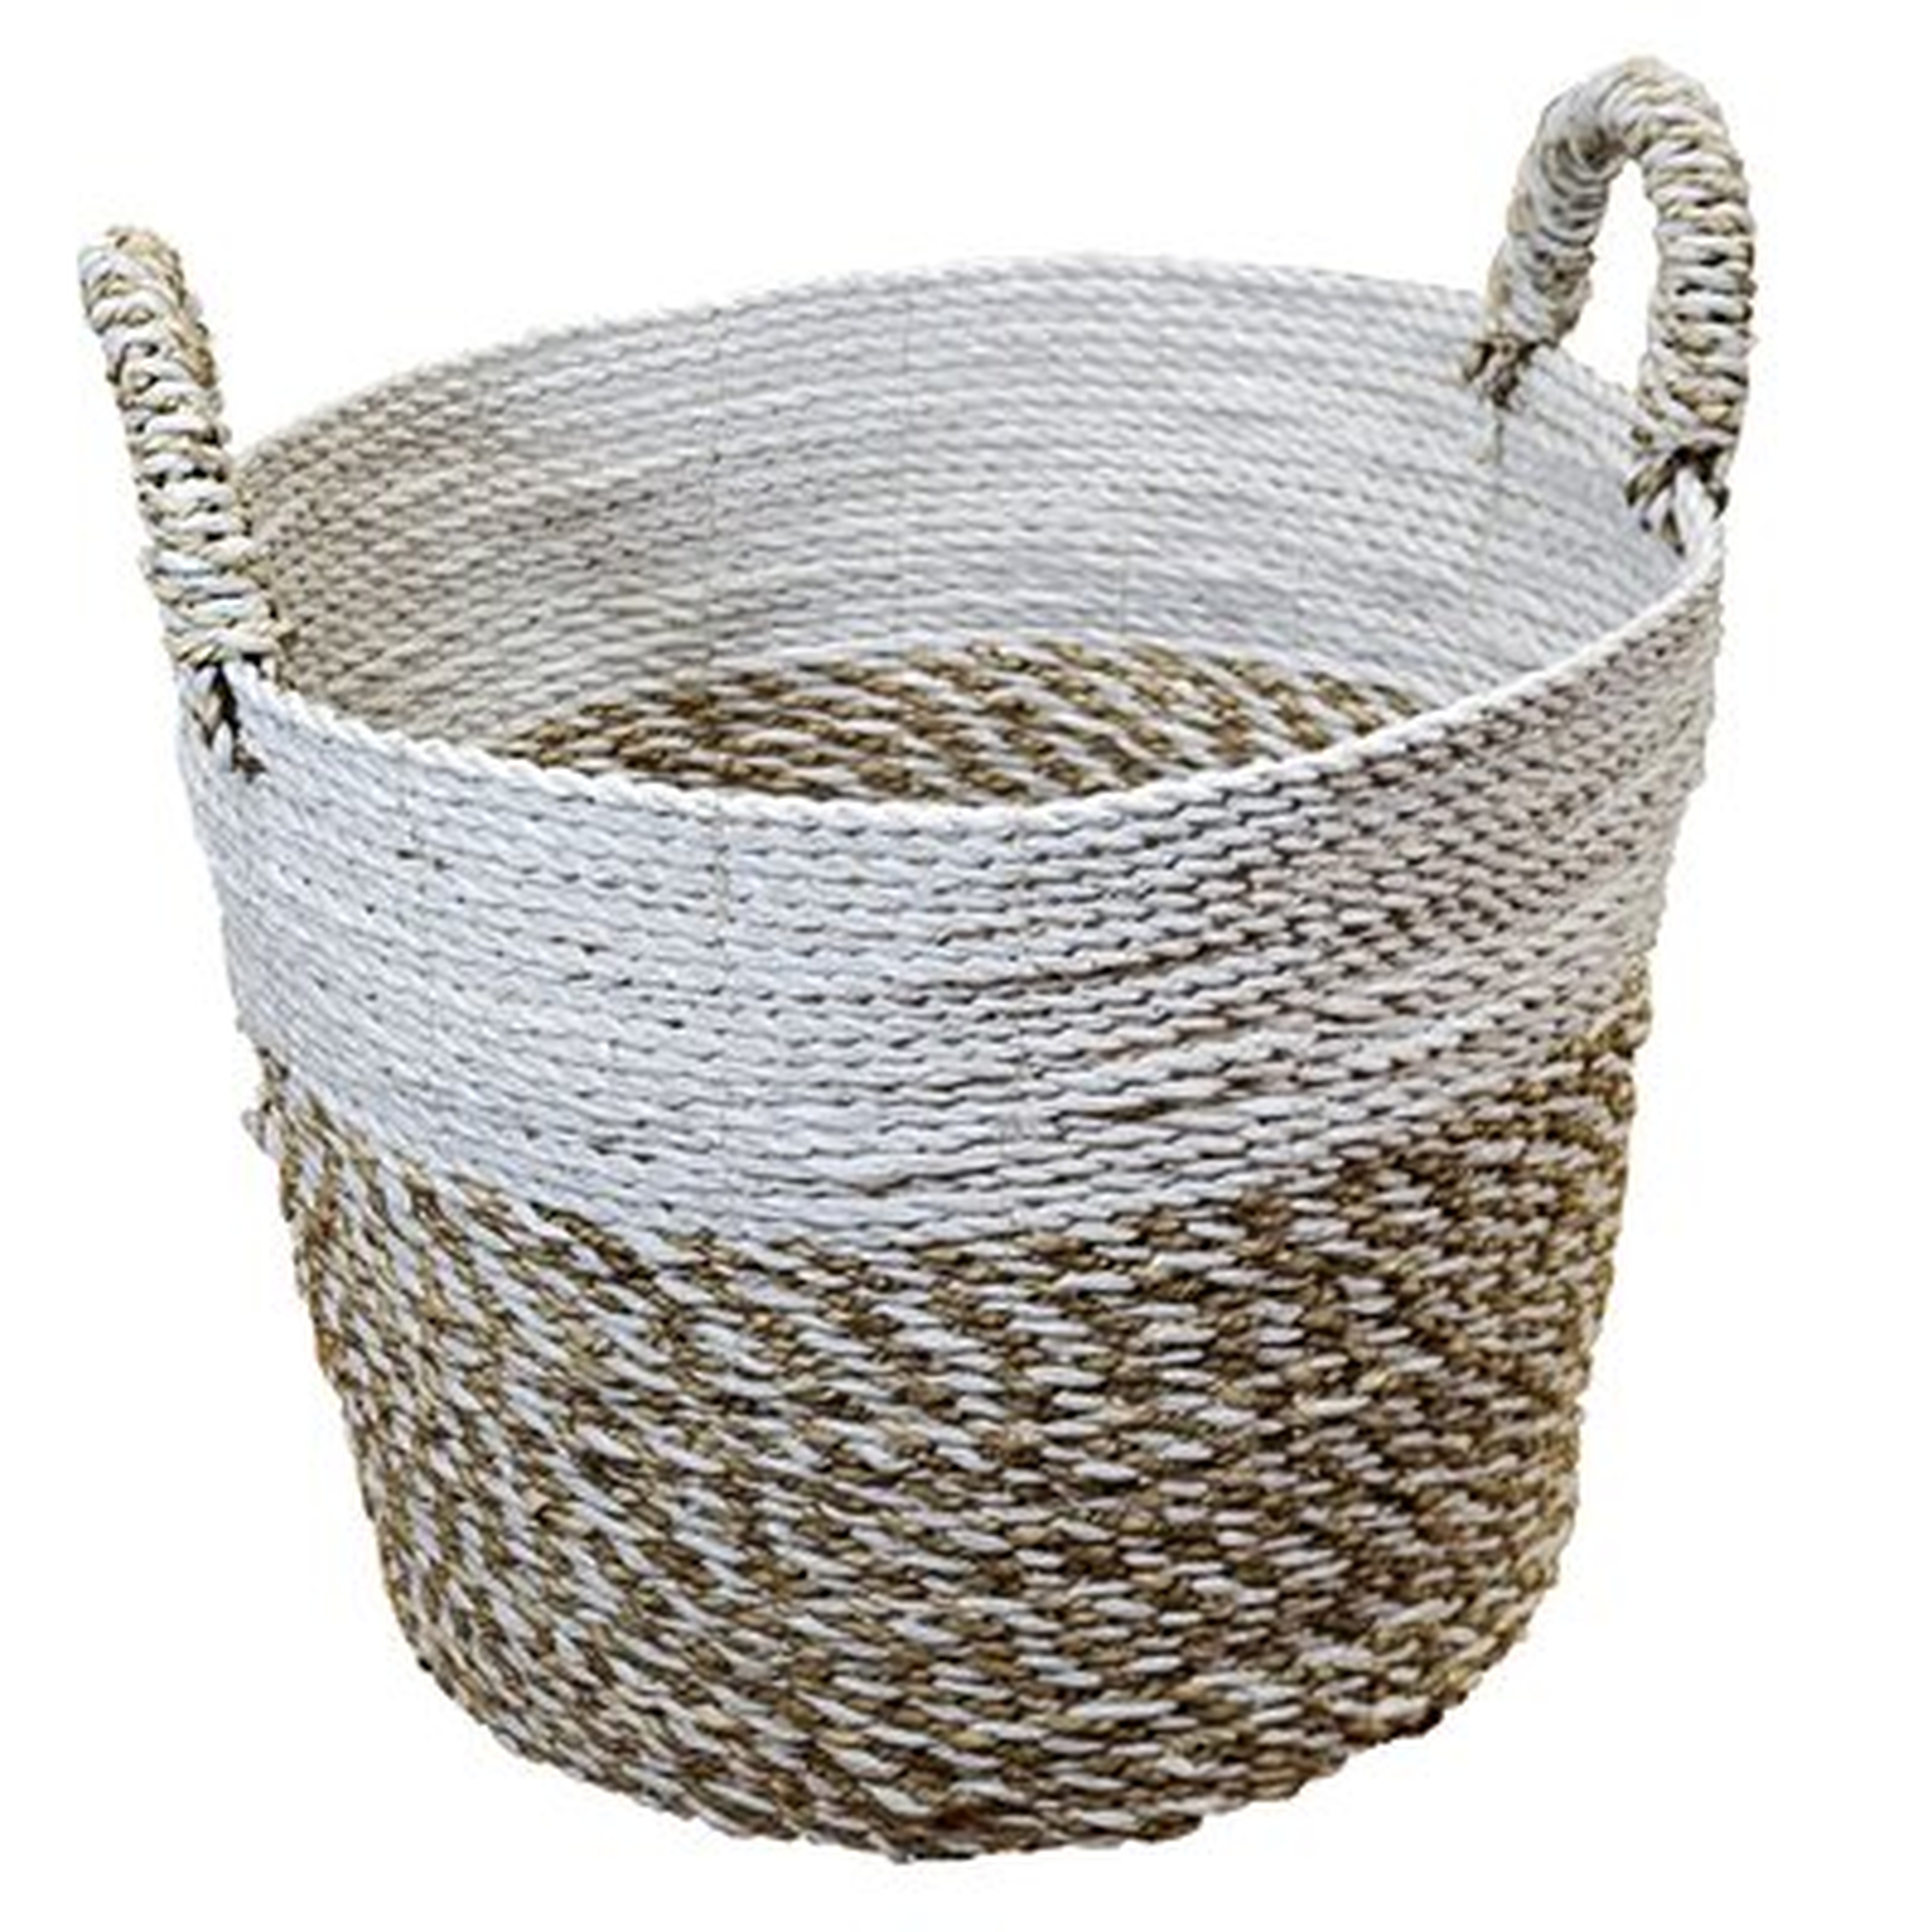 Handwoven Seagrass & Raffia Wicker/Rattan Basket - Wayfair